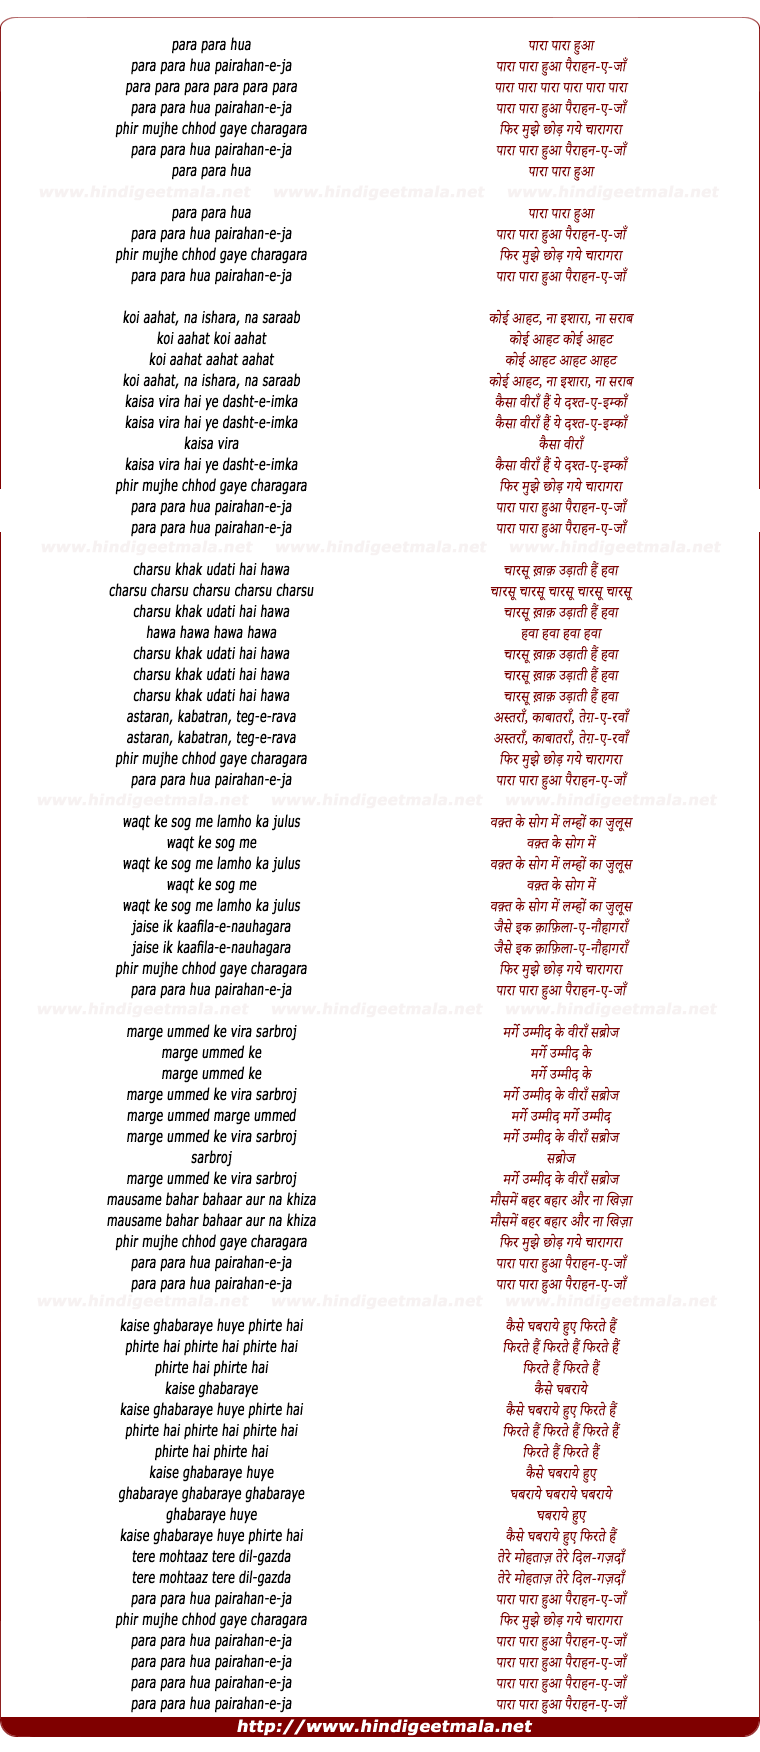 lyrics of song Paaraa Paaraa Huaa Pairaahan E Jaan